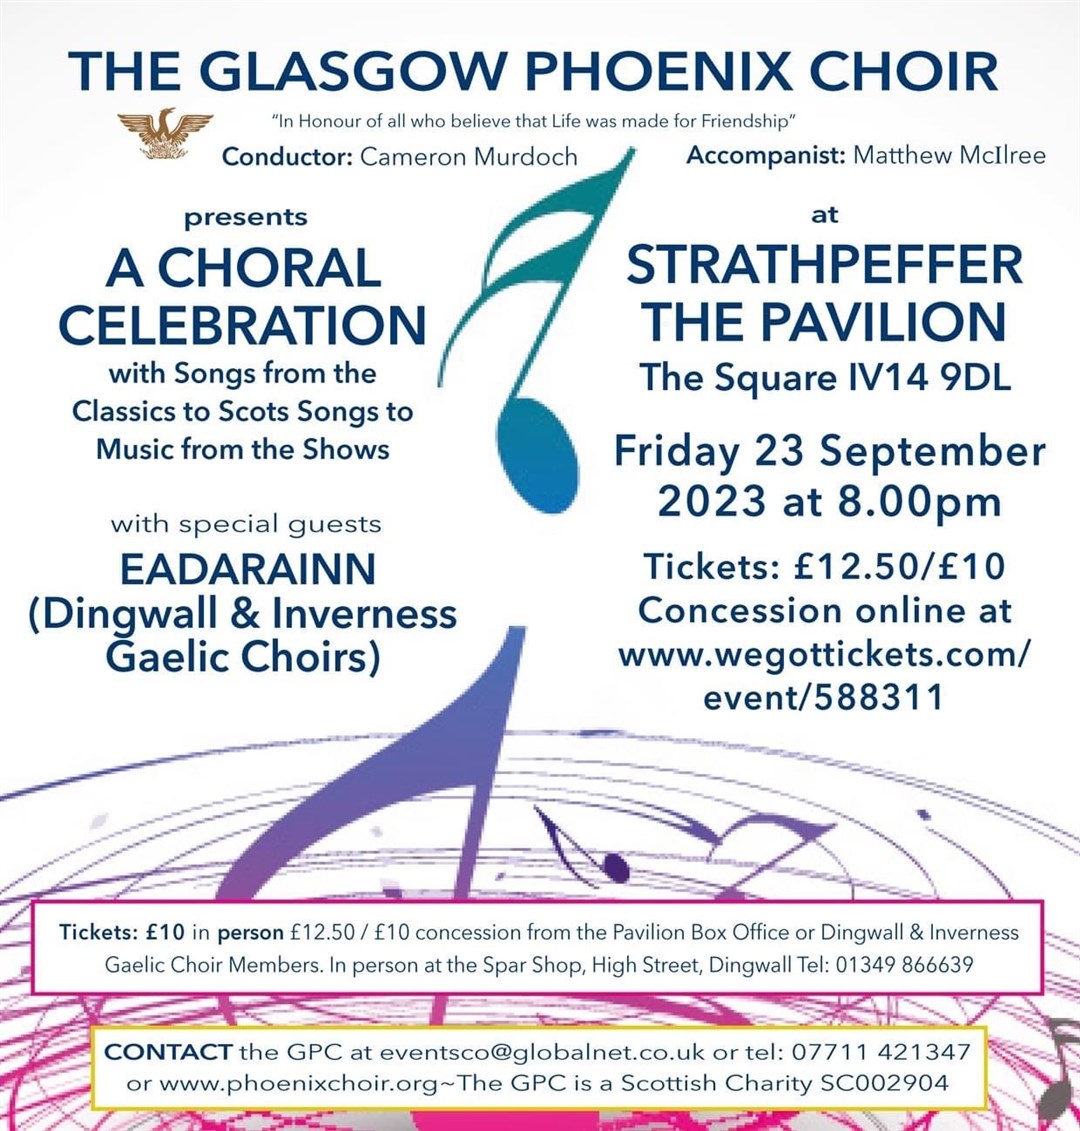 The Glasgow Phoenix Choir perform at The Strathpeffer Pavillion